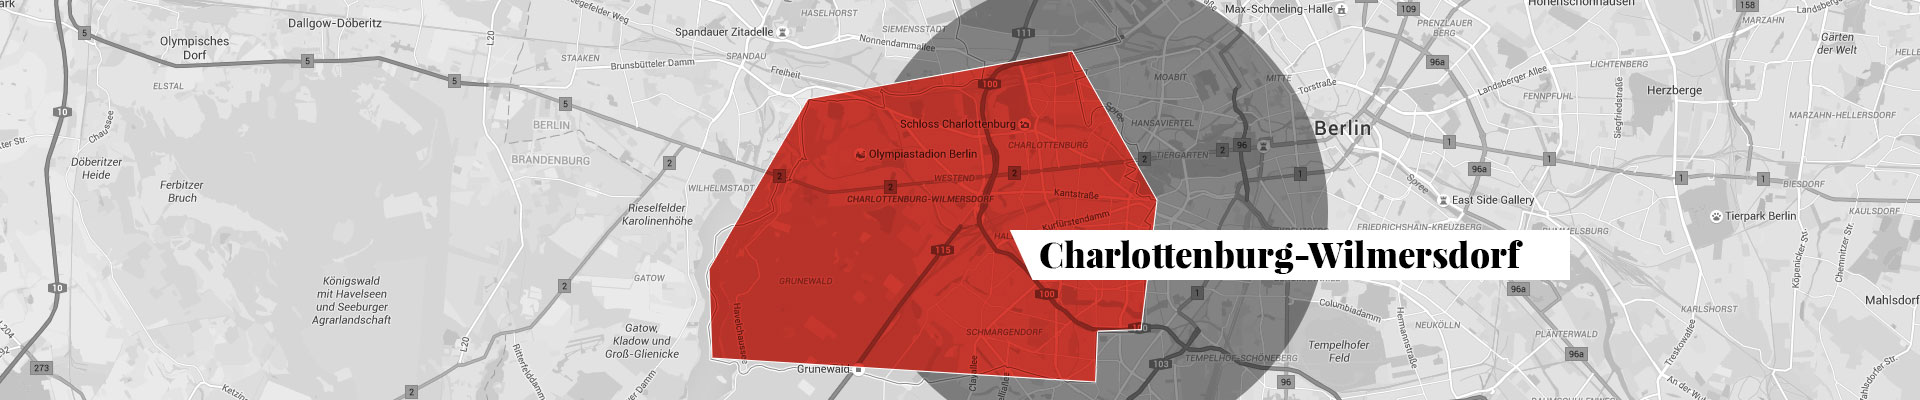 Charlottenburg-Wilmersdorf map